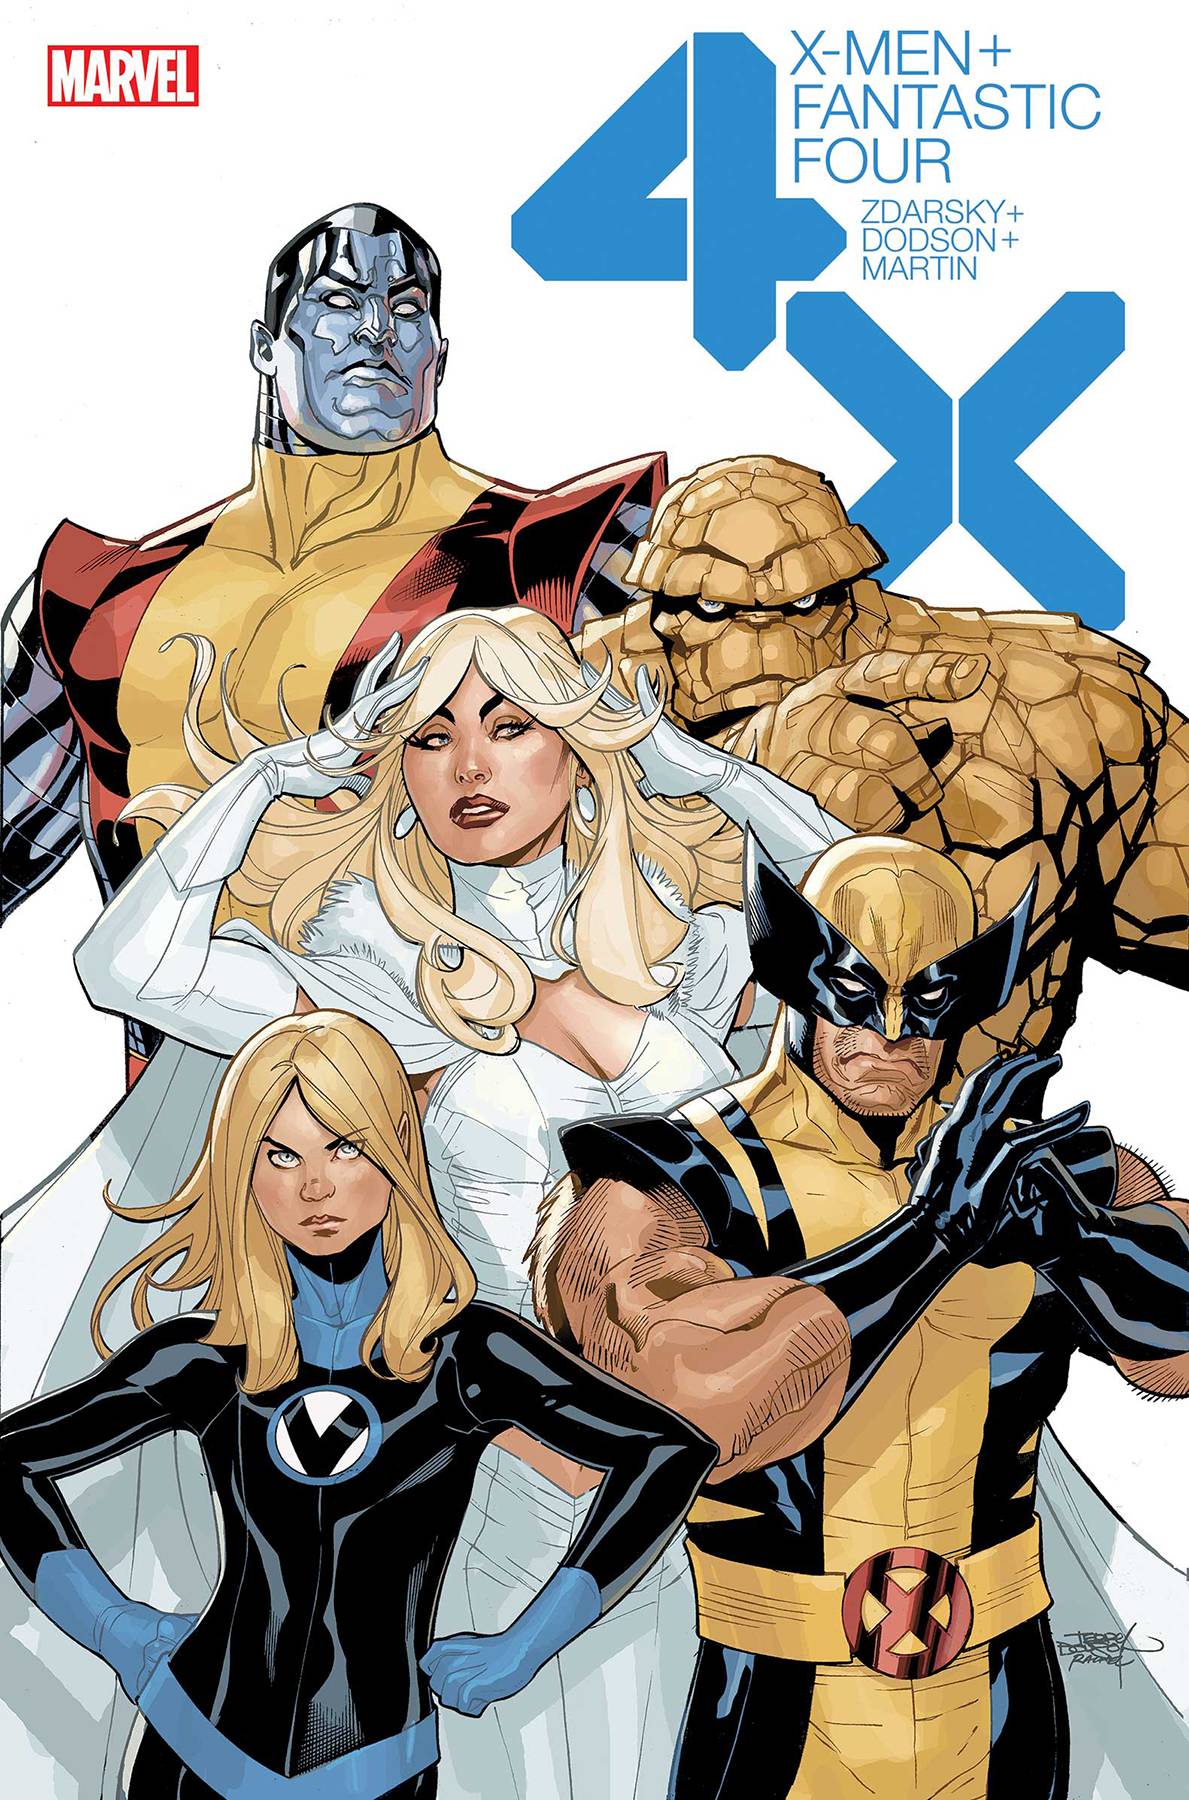 X-MEN FANTASTIC FOUR #2 (OF 4